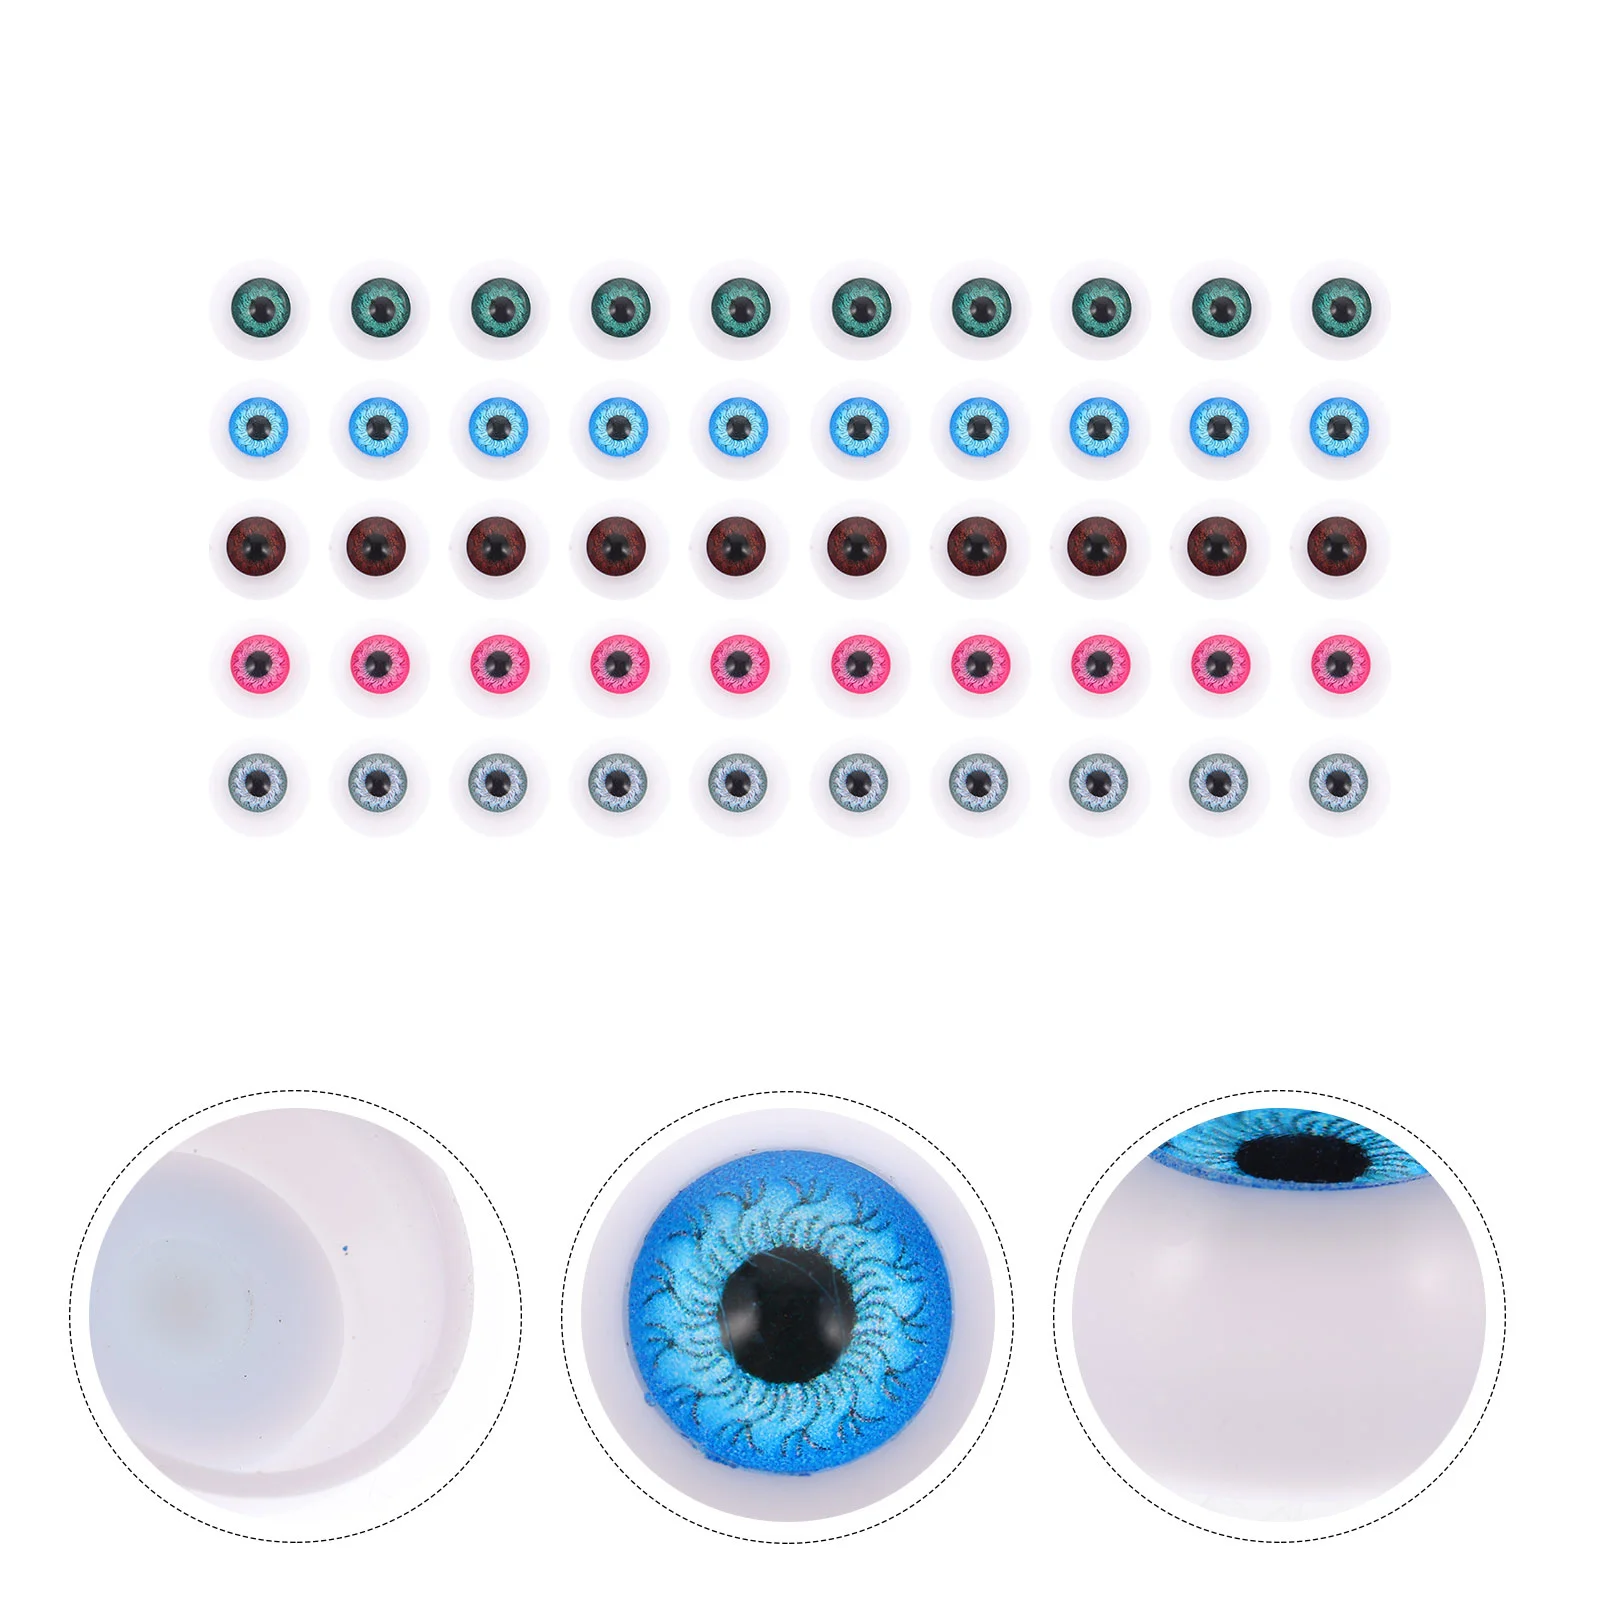 50 pcs artificial eyes diy material decor halloween props craft supplies bear eyeballs for accessory realistic acrylic 50 Pcs Decor Artificial Eyes Acrylic Eyes Realistic Three-dimensional DIY Crafts Acrylic Supplies for